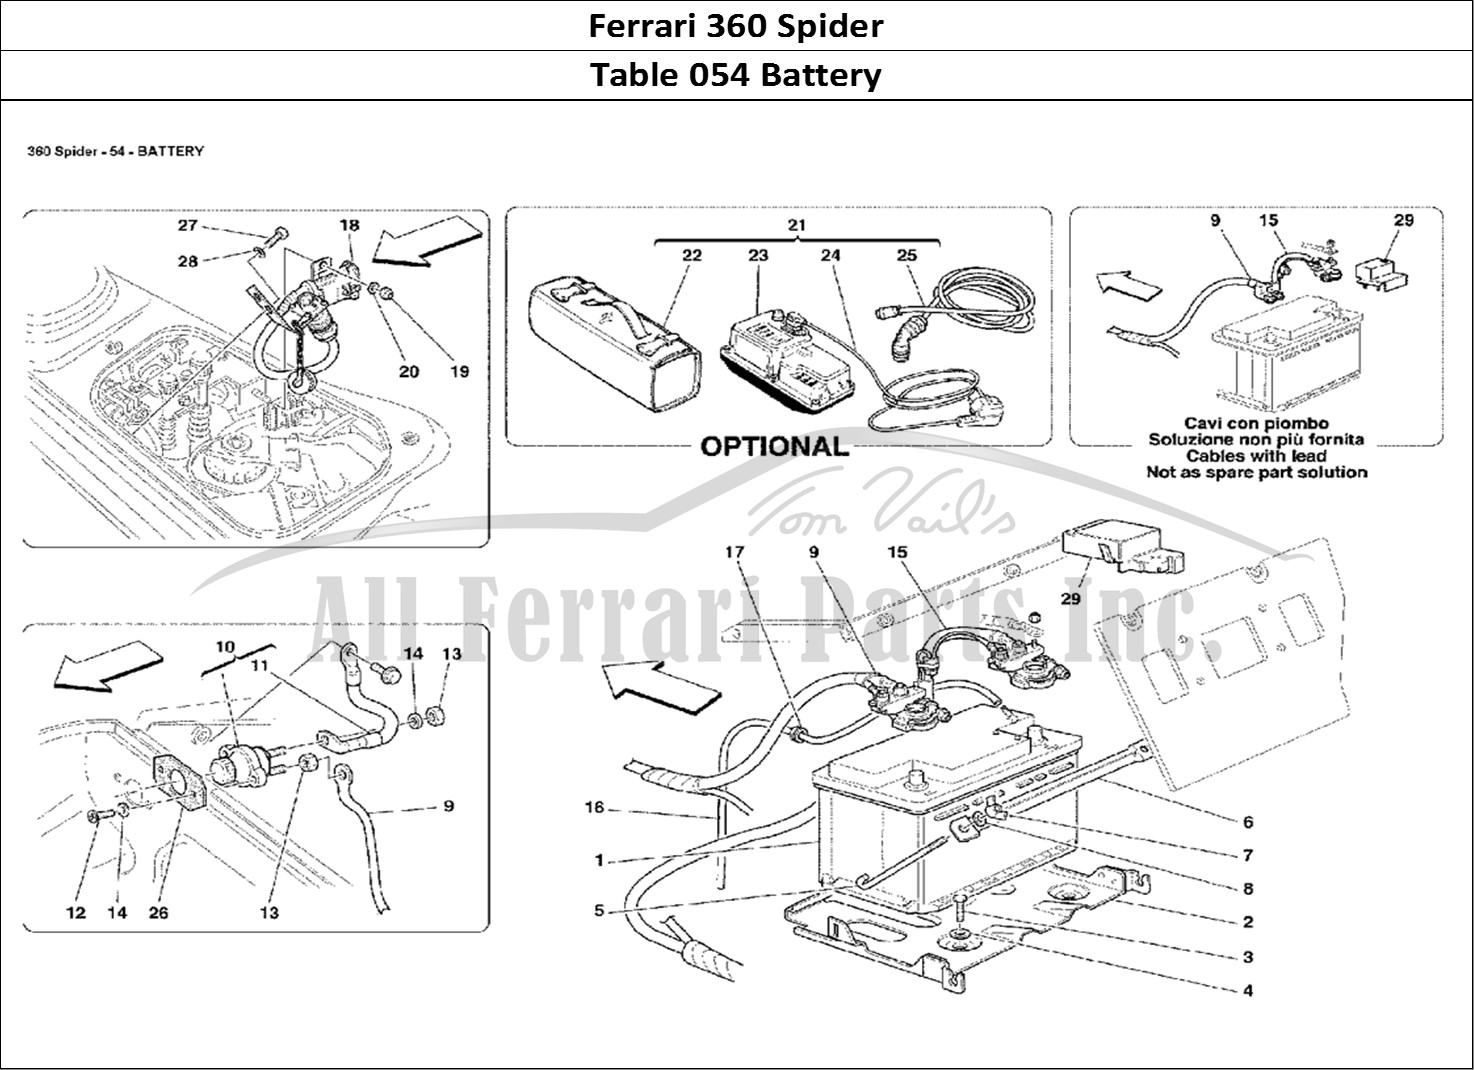 Ferrari Parts Ferrari 360 Spider Page 054 Battery